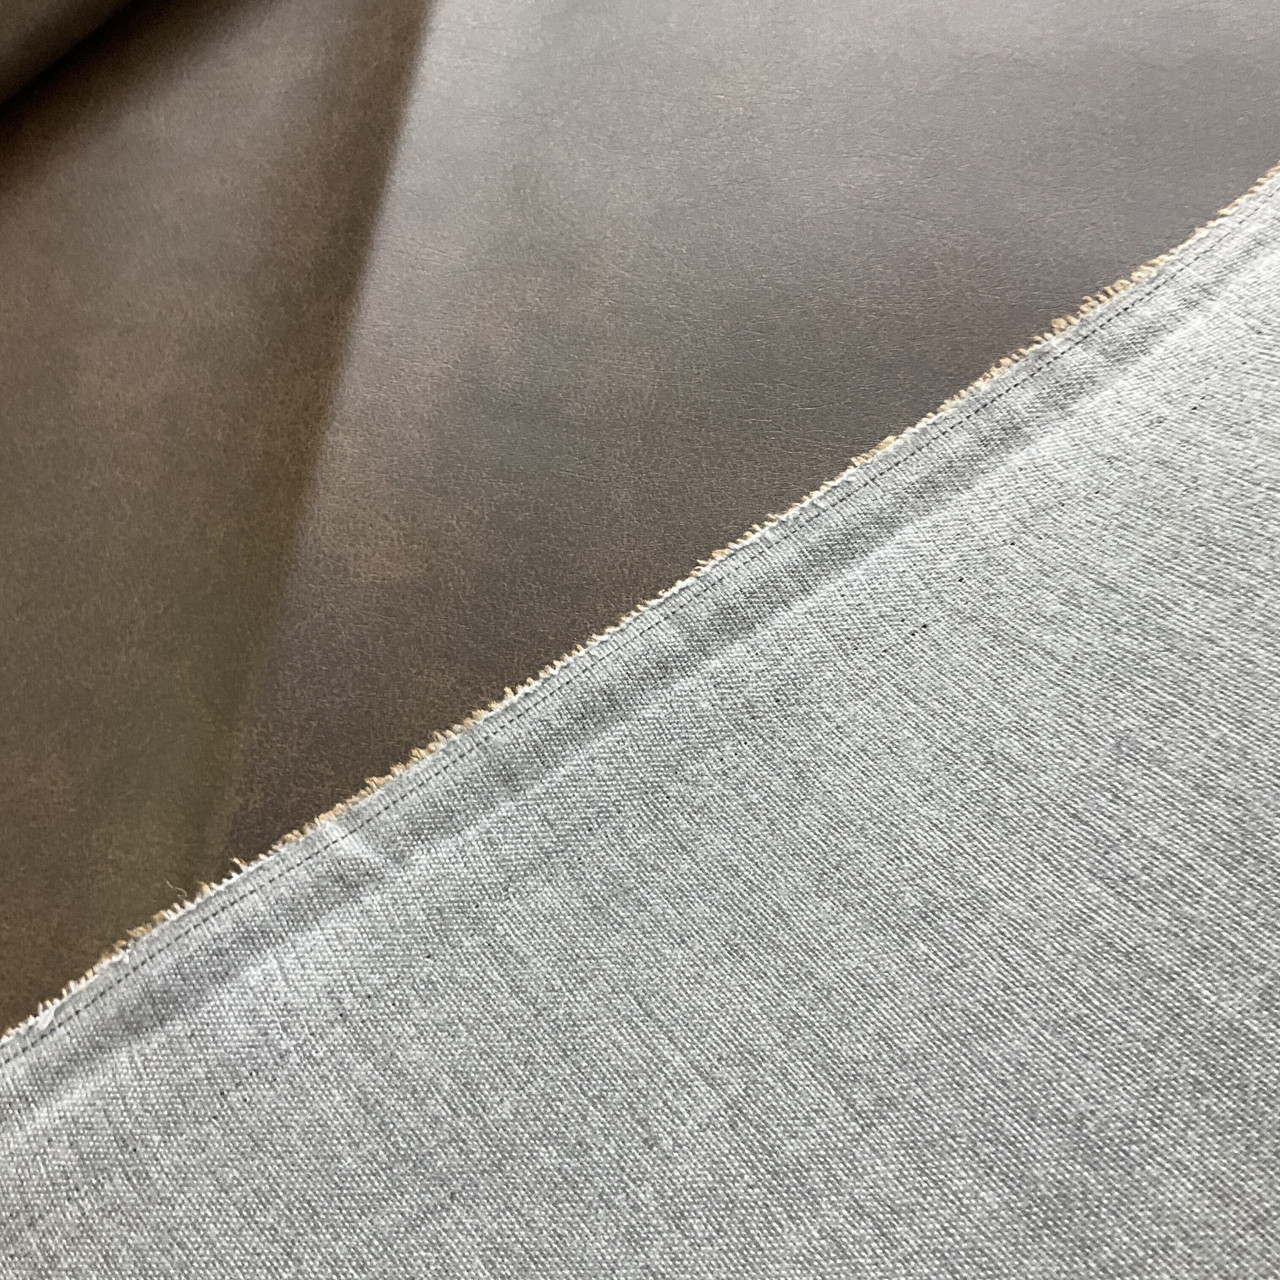 Richloom Fabrics Zahara Chocolate Brown Upholstery Fabric – Toto